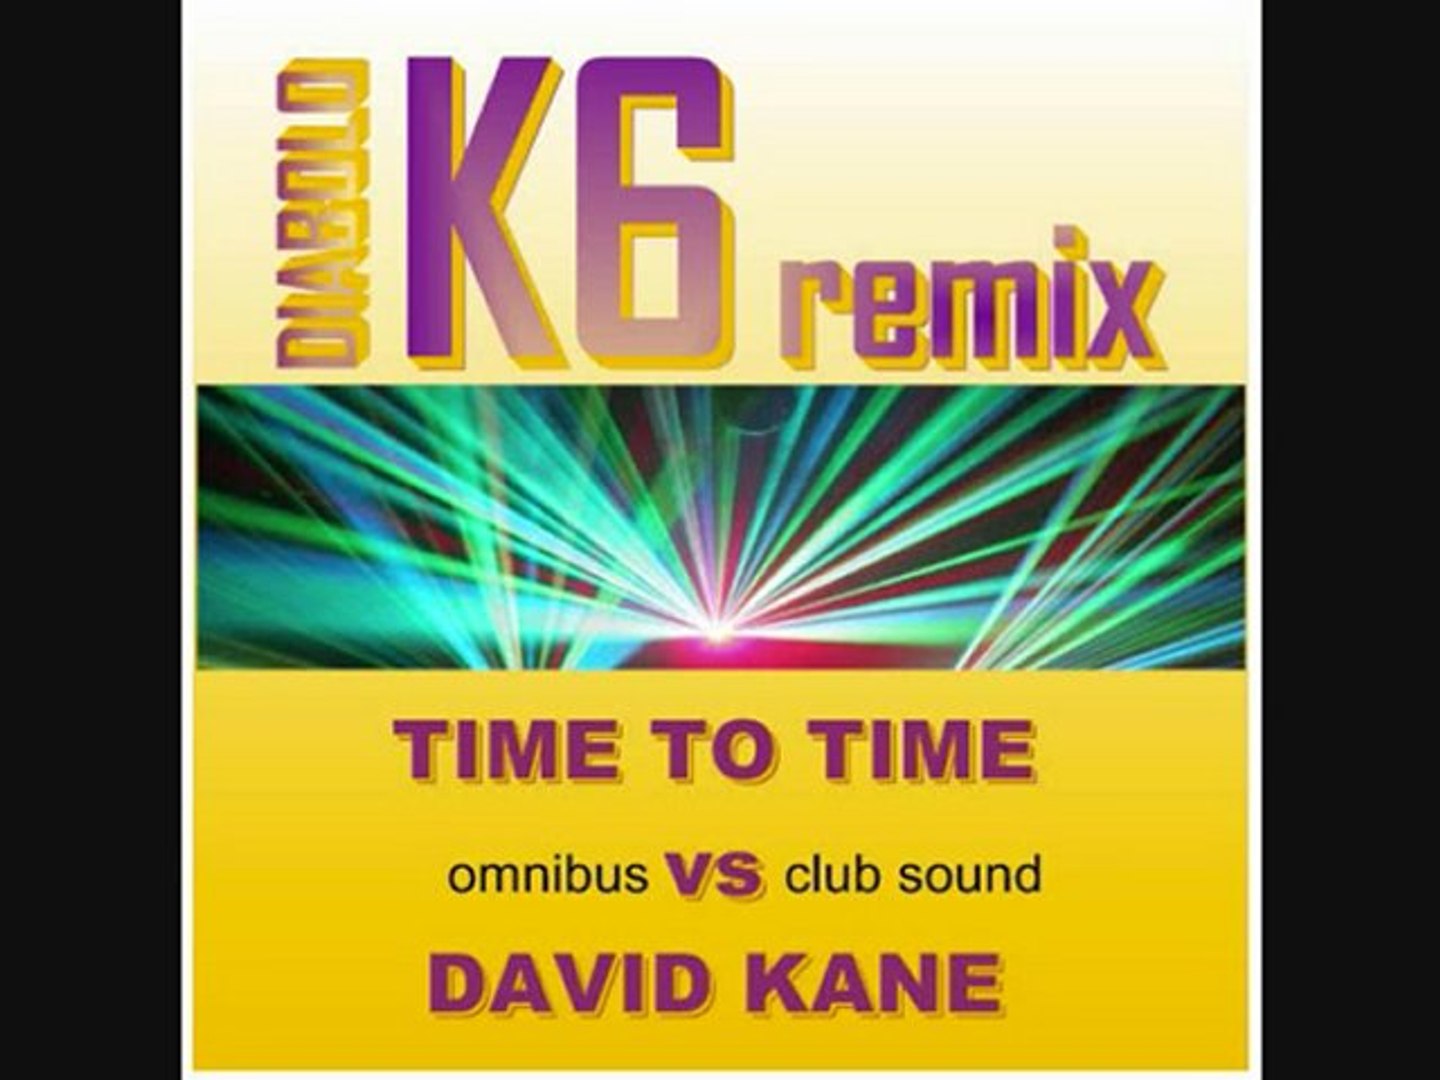 TIME TO TIME vs DAVID KANE